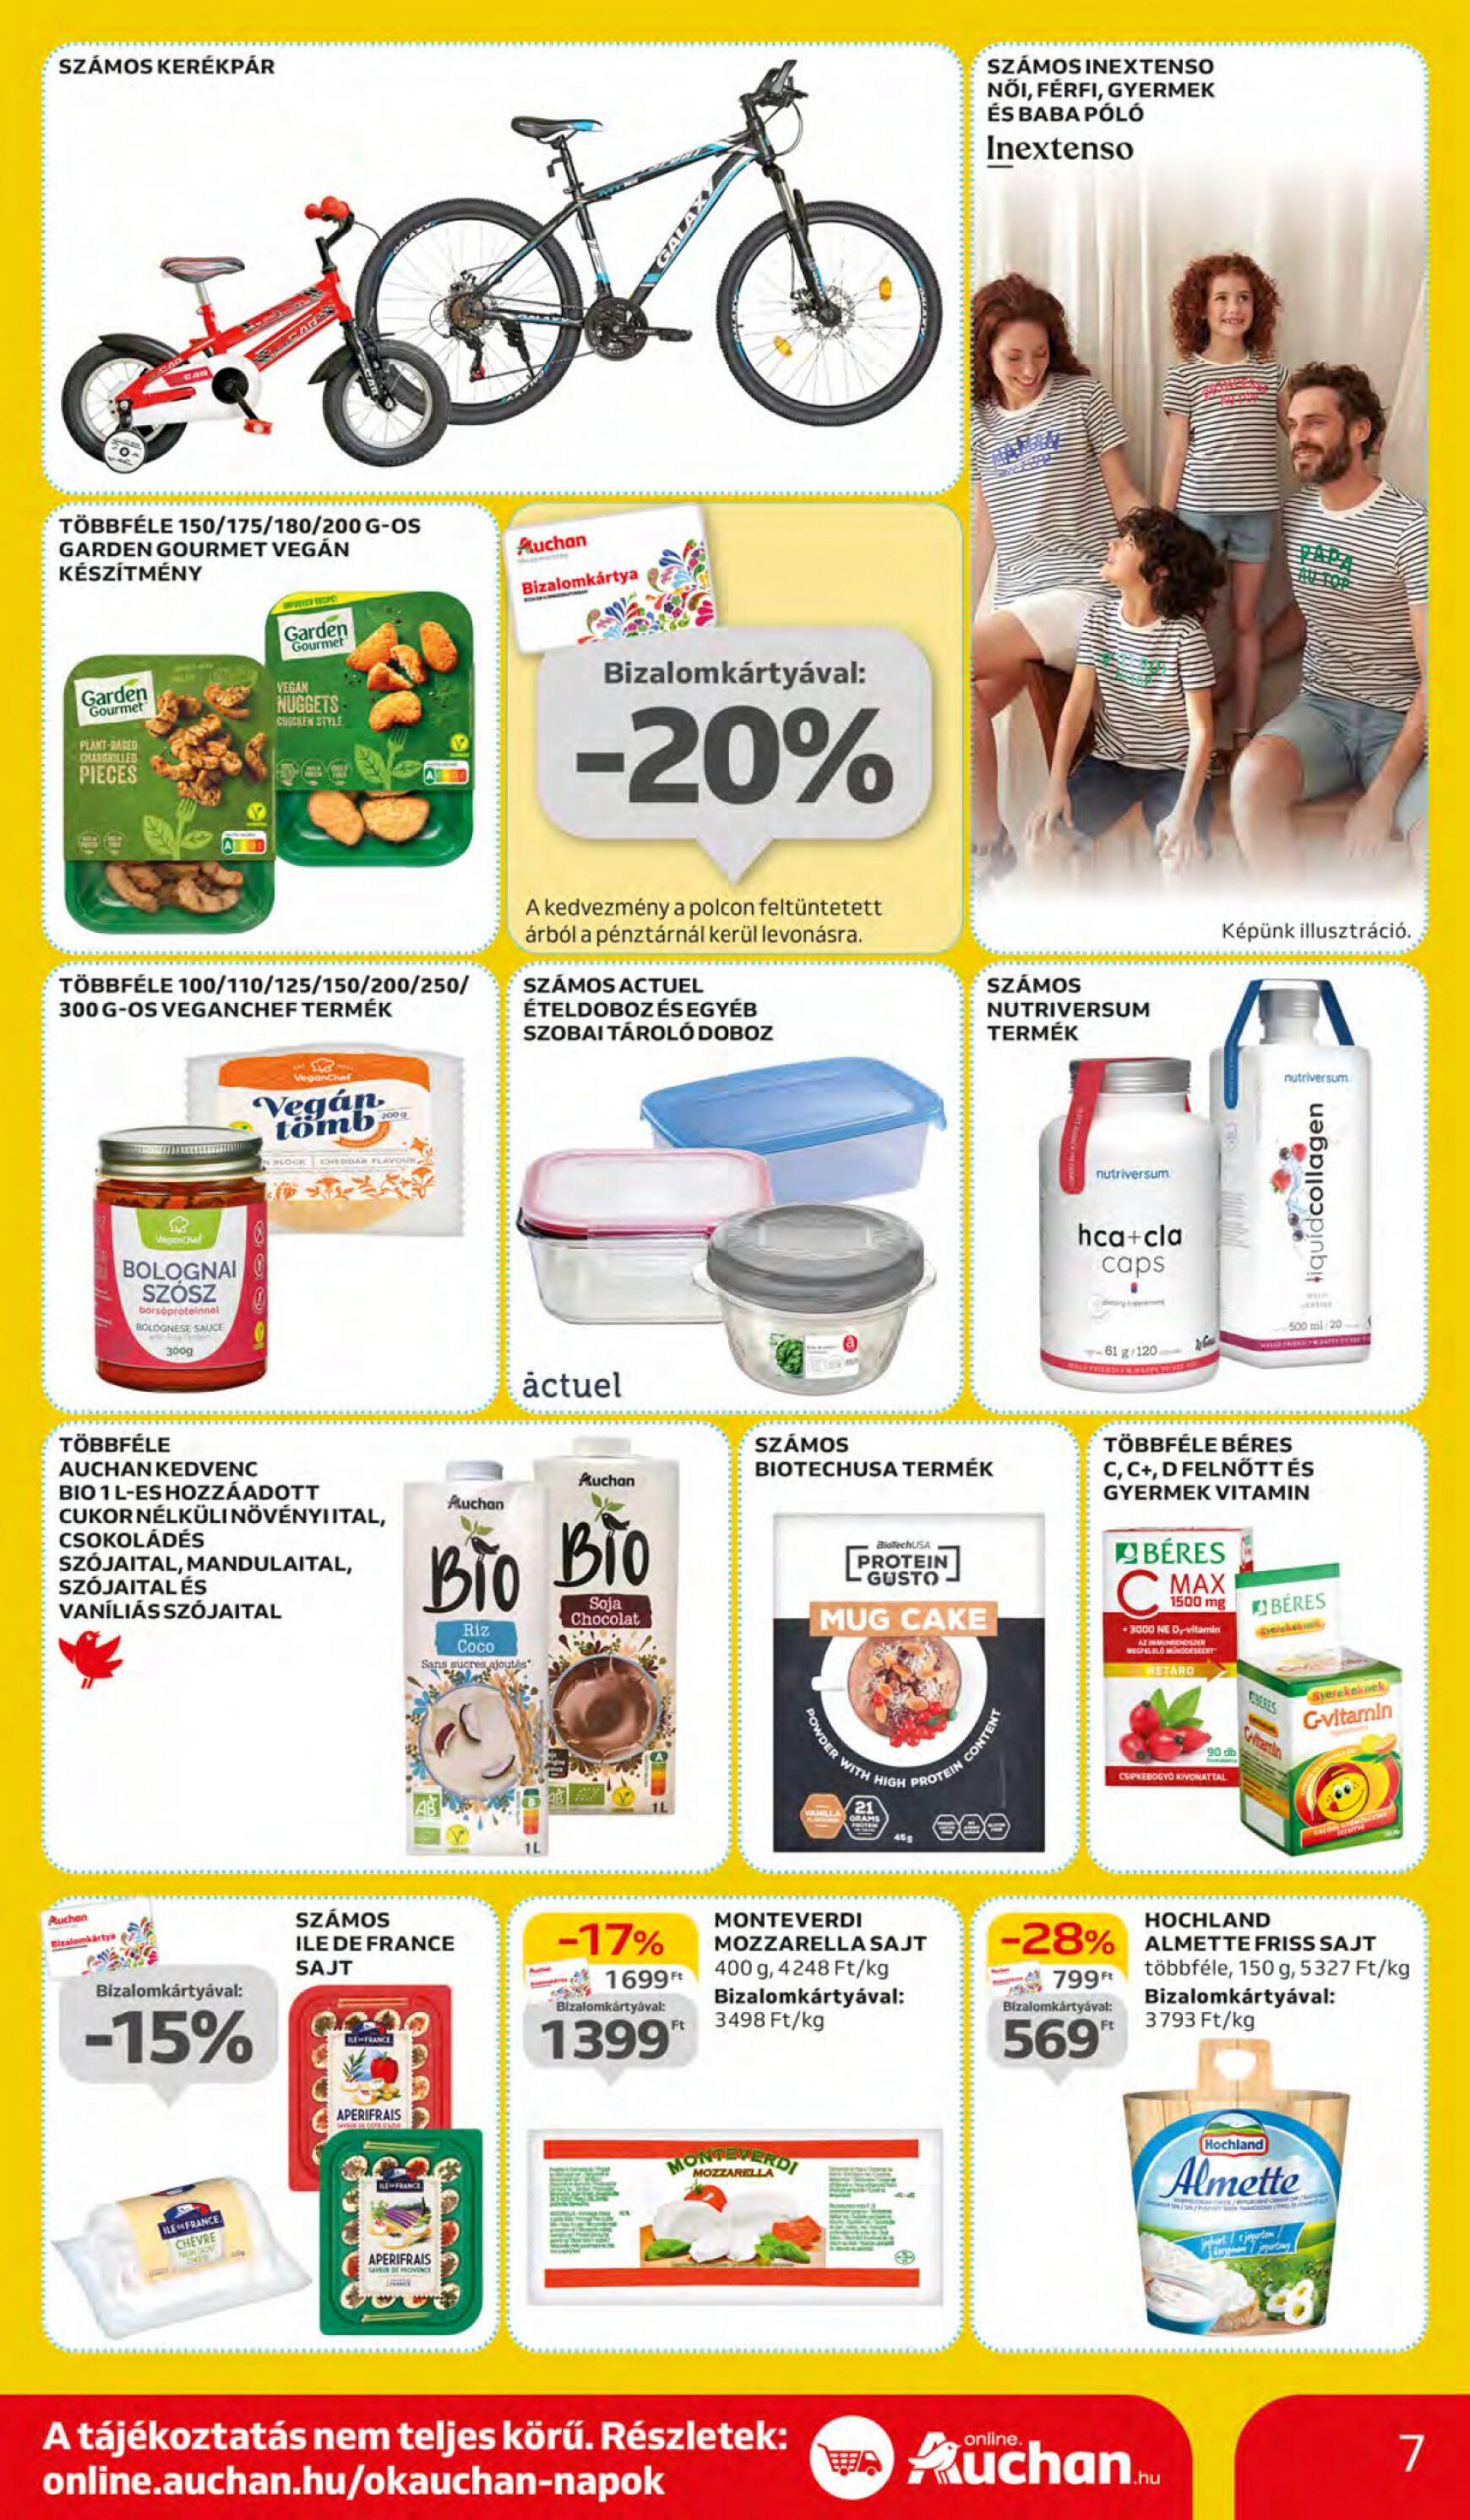 auchan - Aktuális újság Auchan 04.11. - 04.17. - page: 7